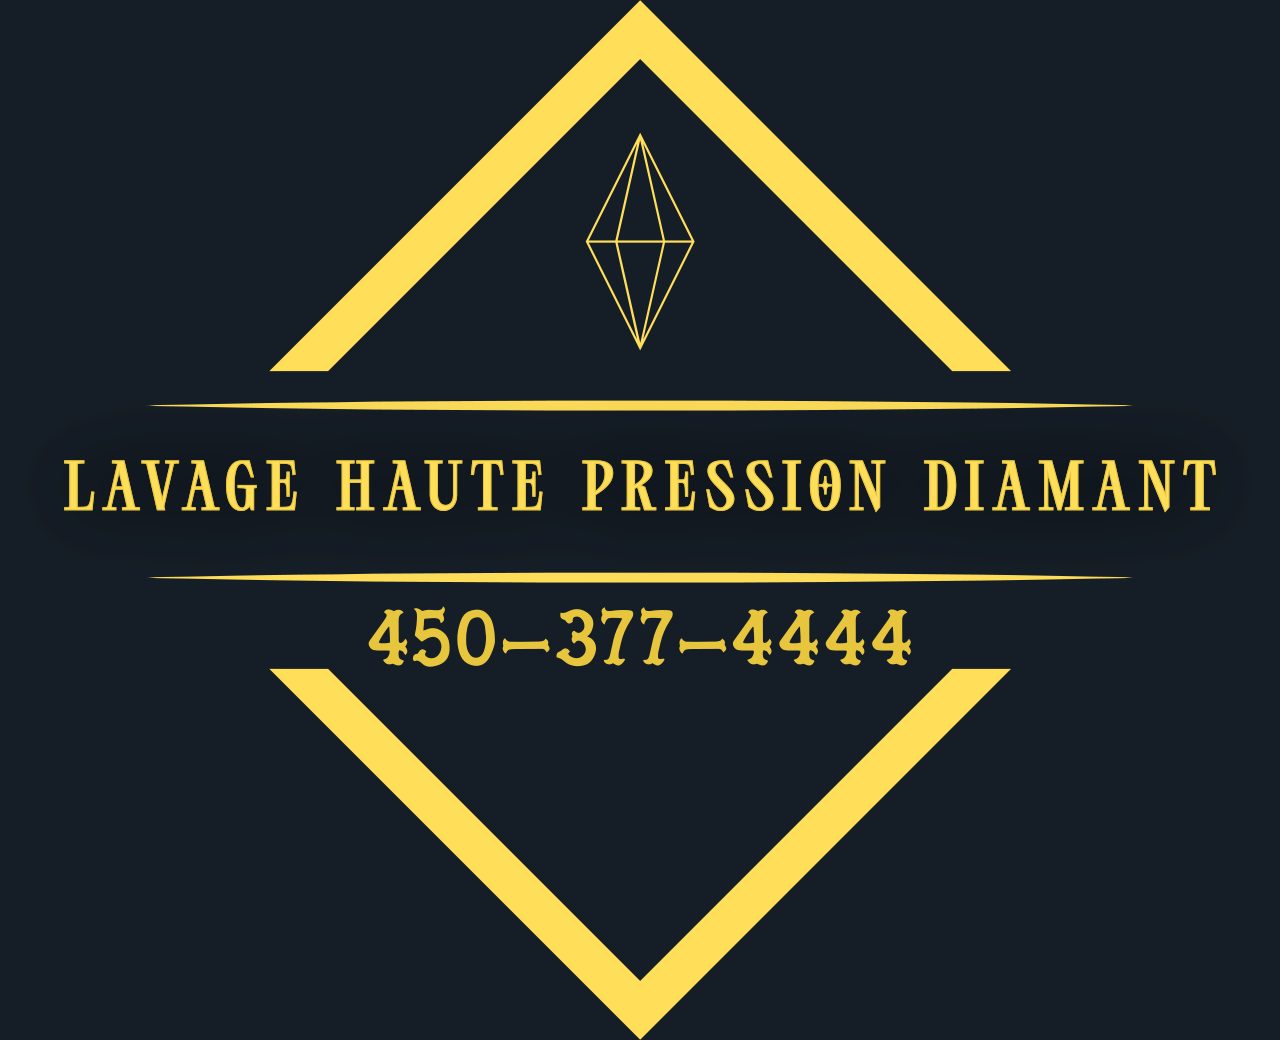 Lavage Haute Pression Diamant /Diamond High Pressure Washing's logo